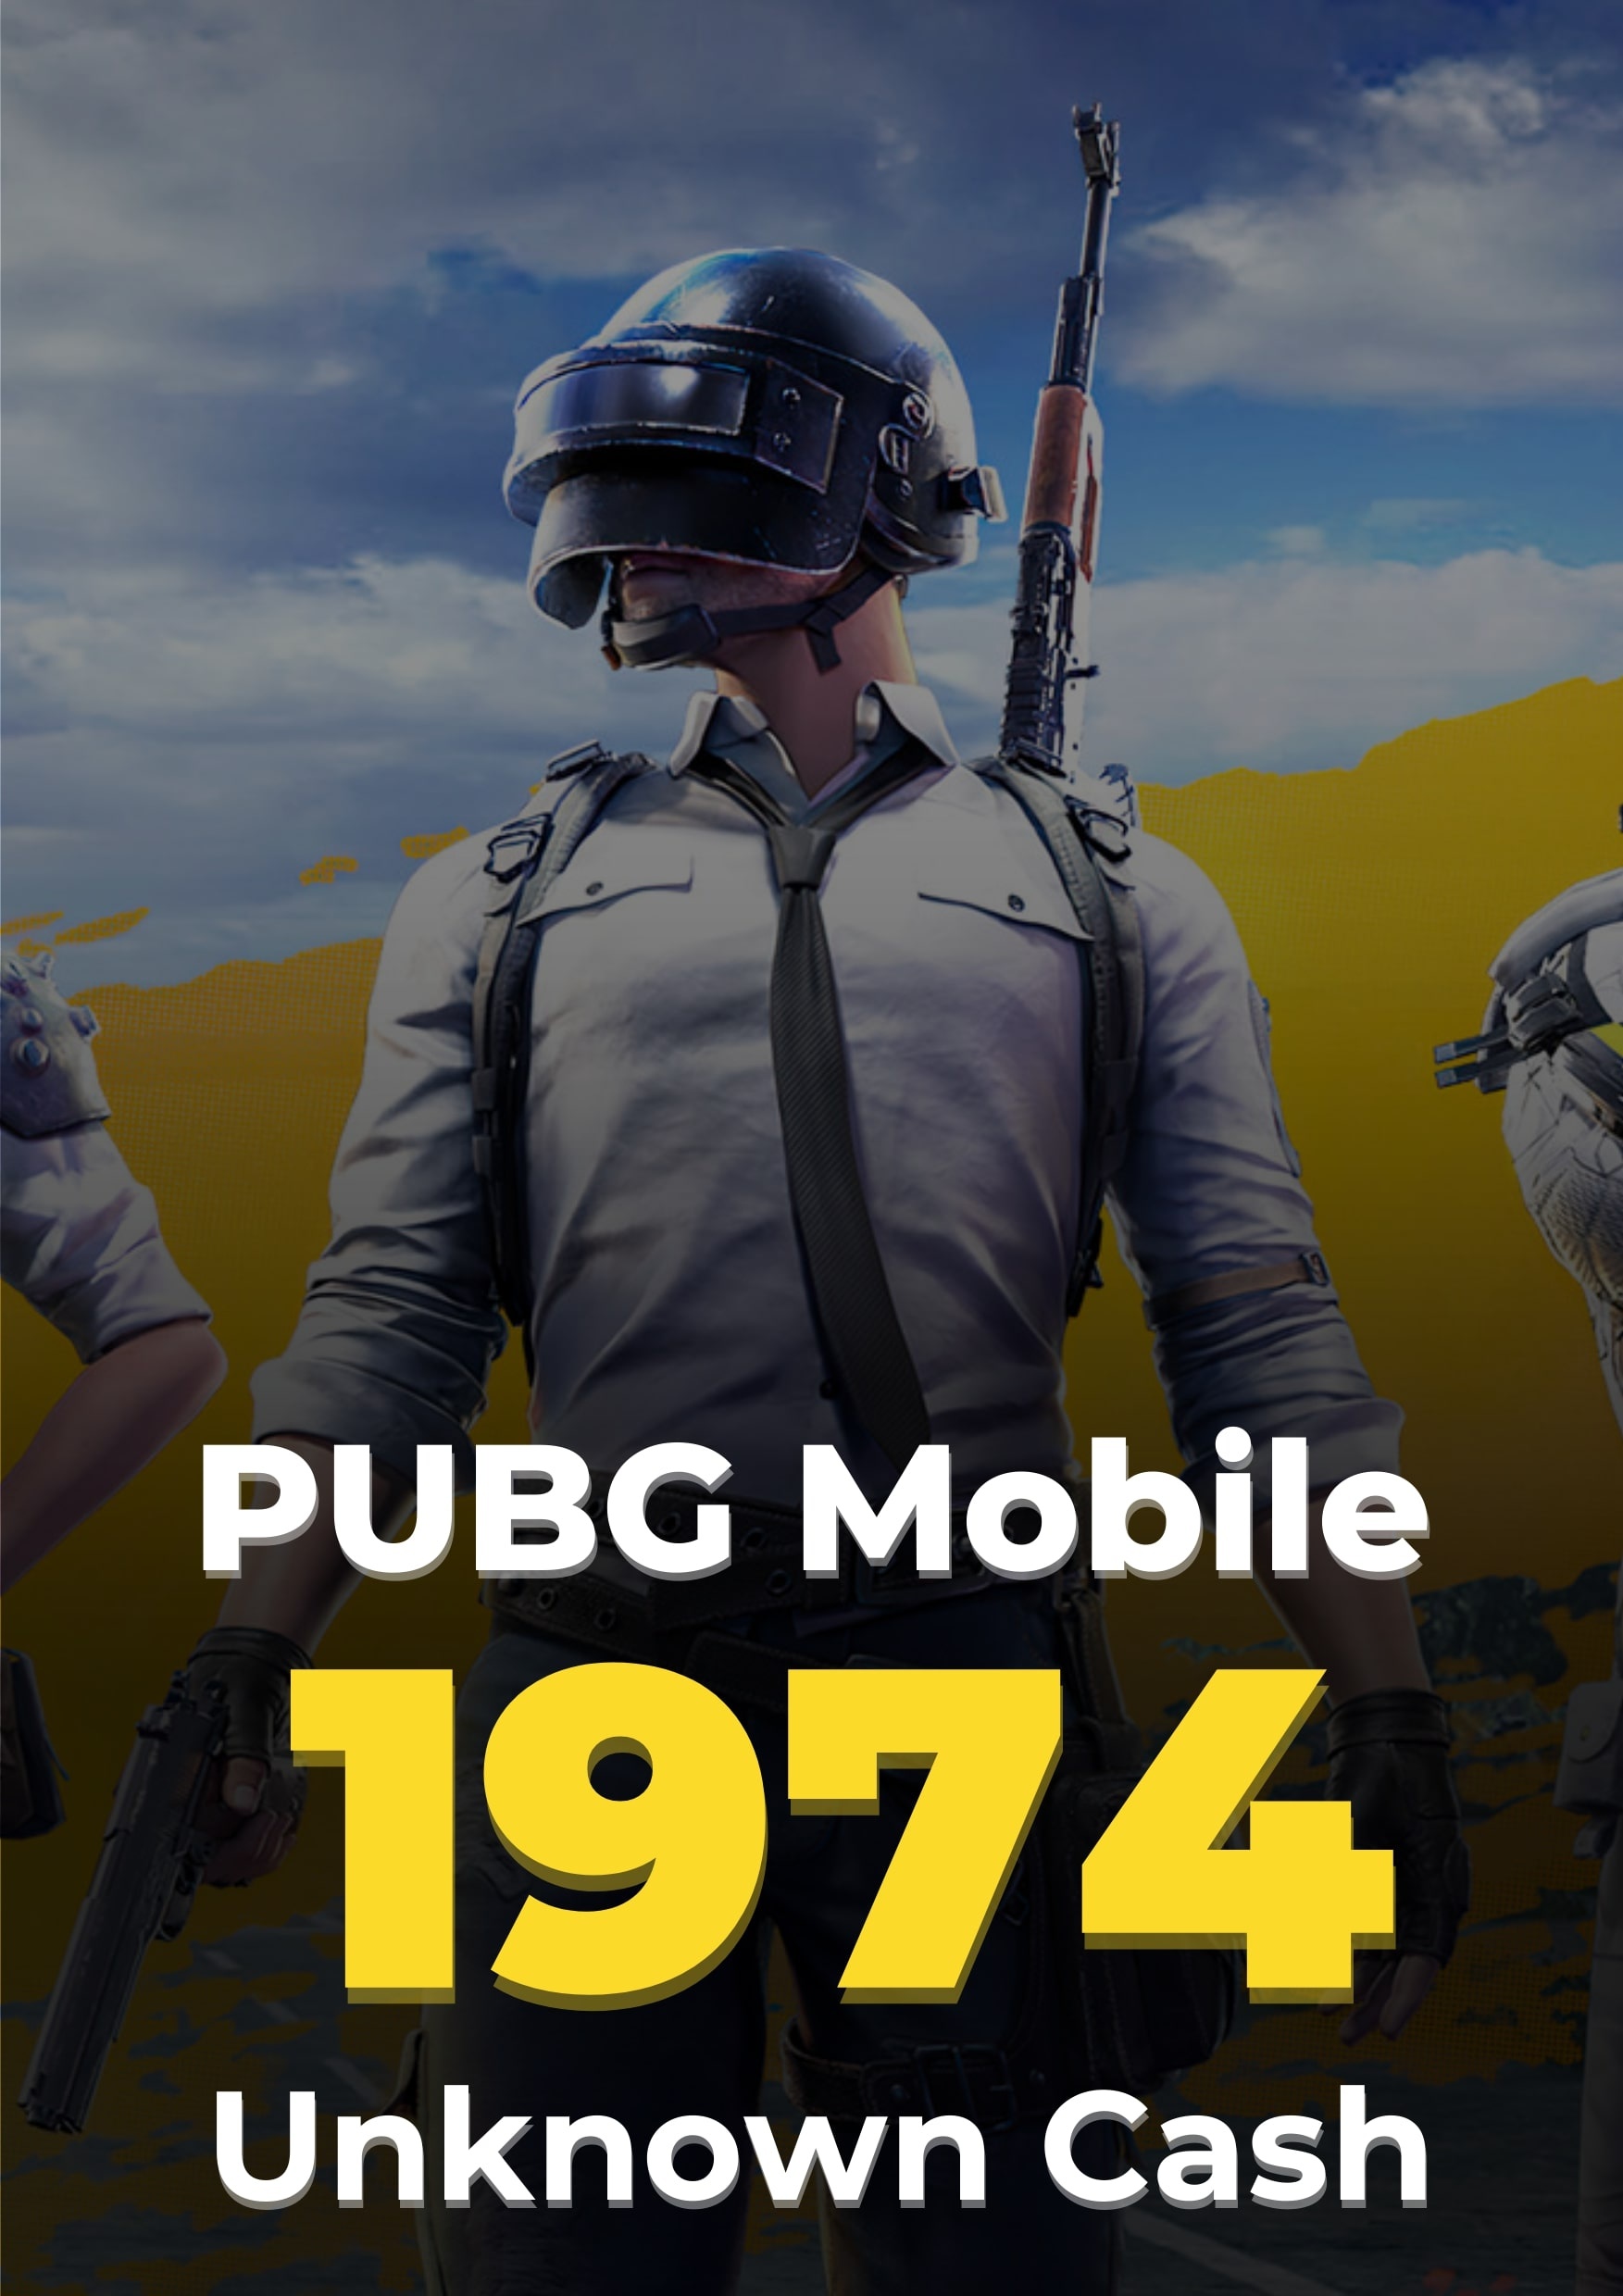 PUBG Mobile 1974 UC